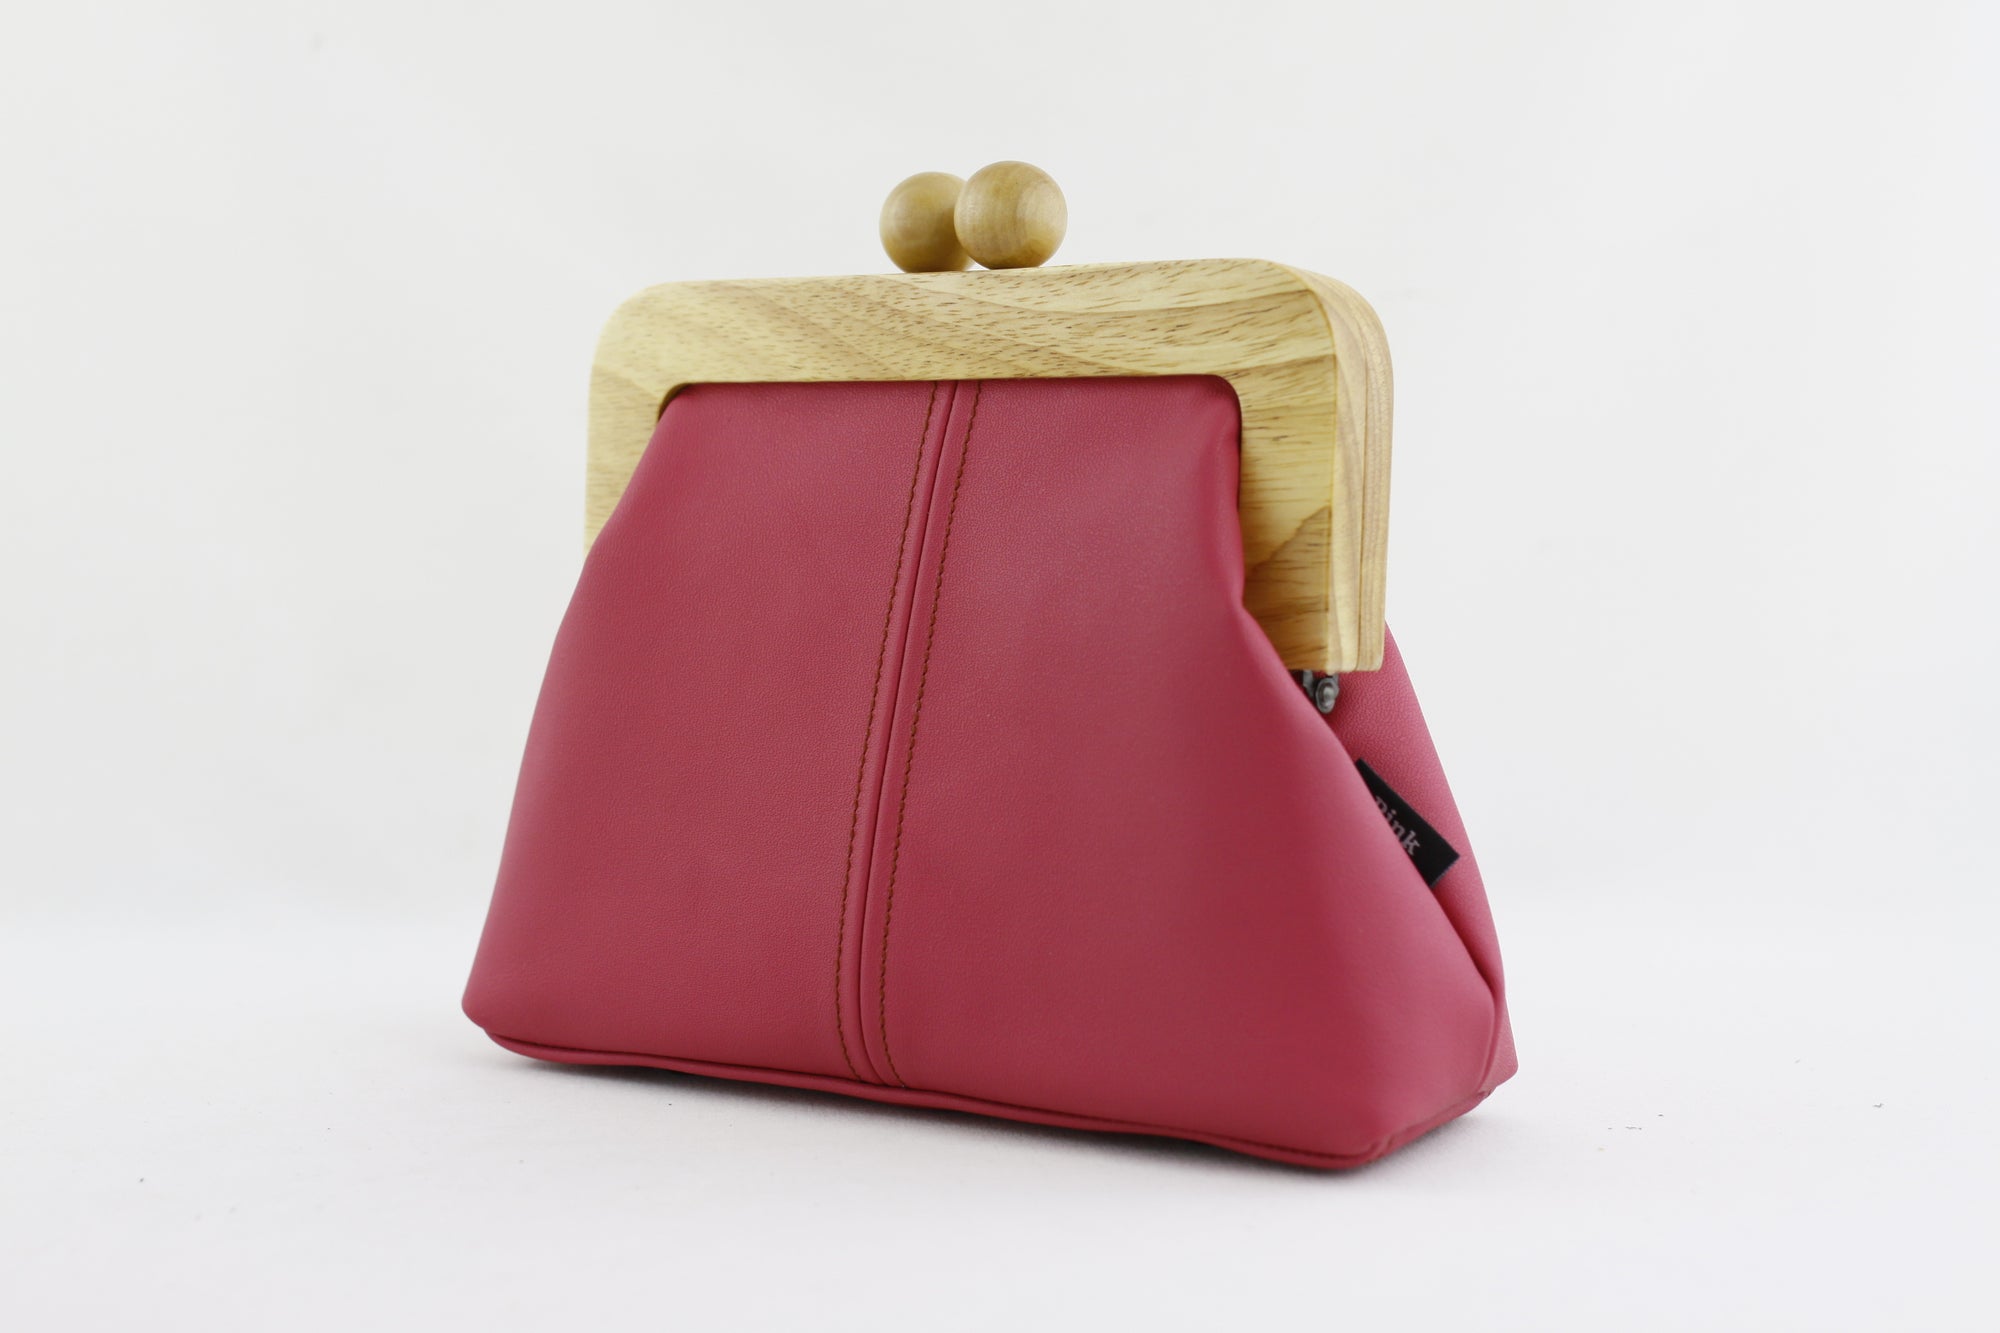 Women's Fuchsia Genuine Leather Clutch Bag with Strap | PINKOASIS